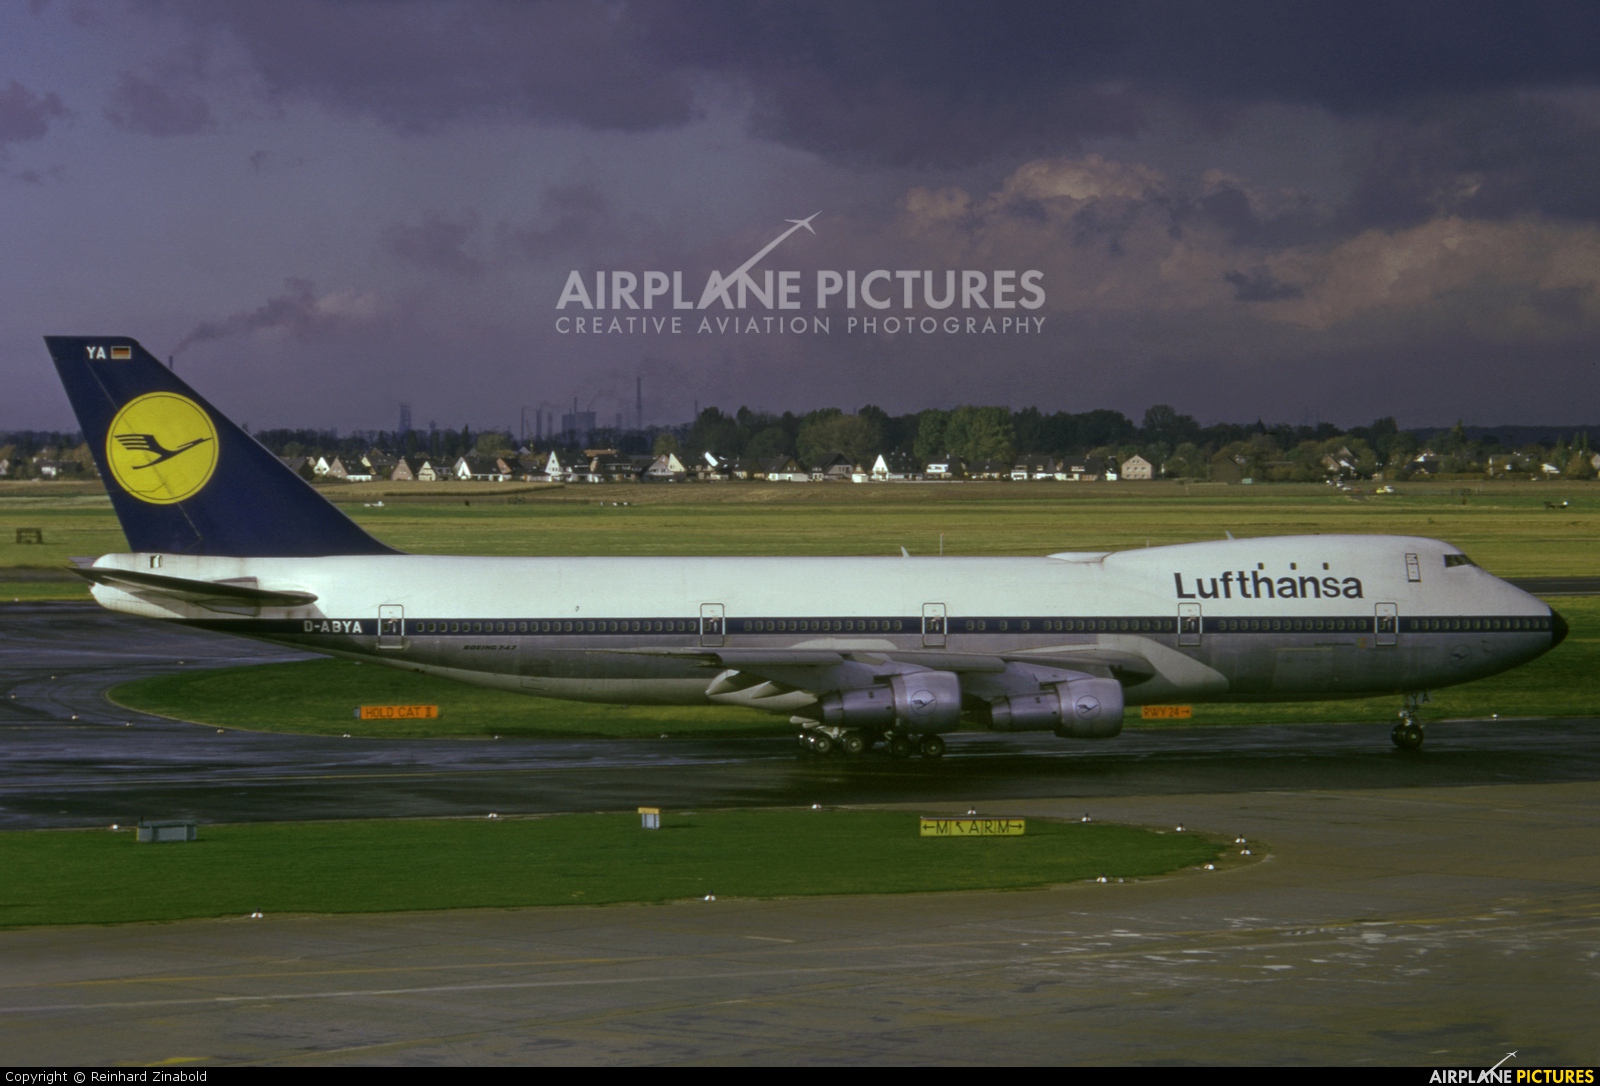 Lufthansa D-ABYA aircraft at Düsseldorf